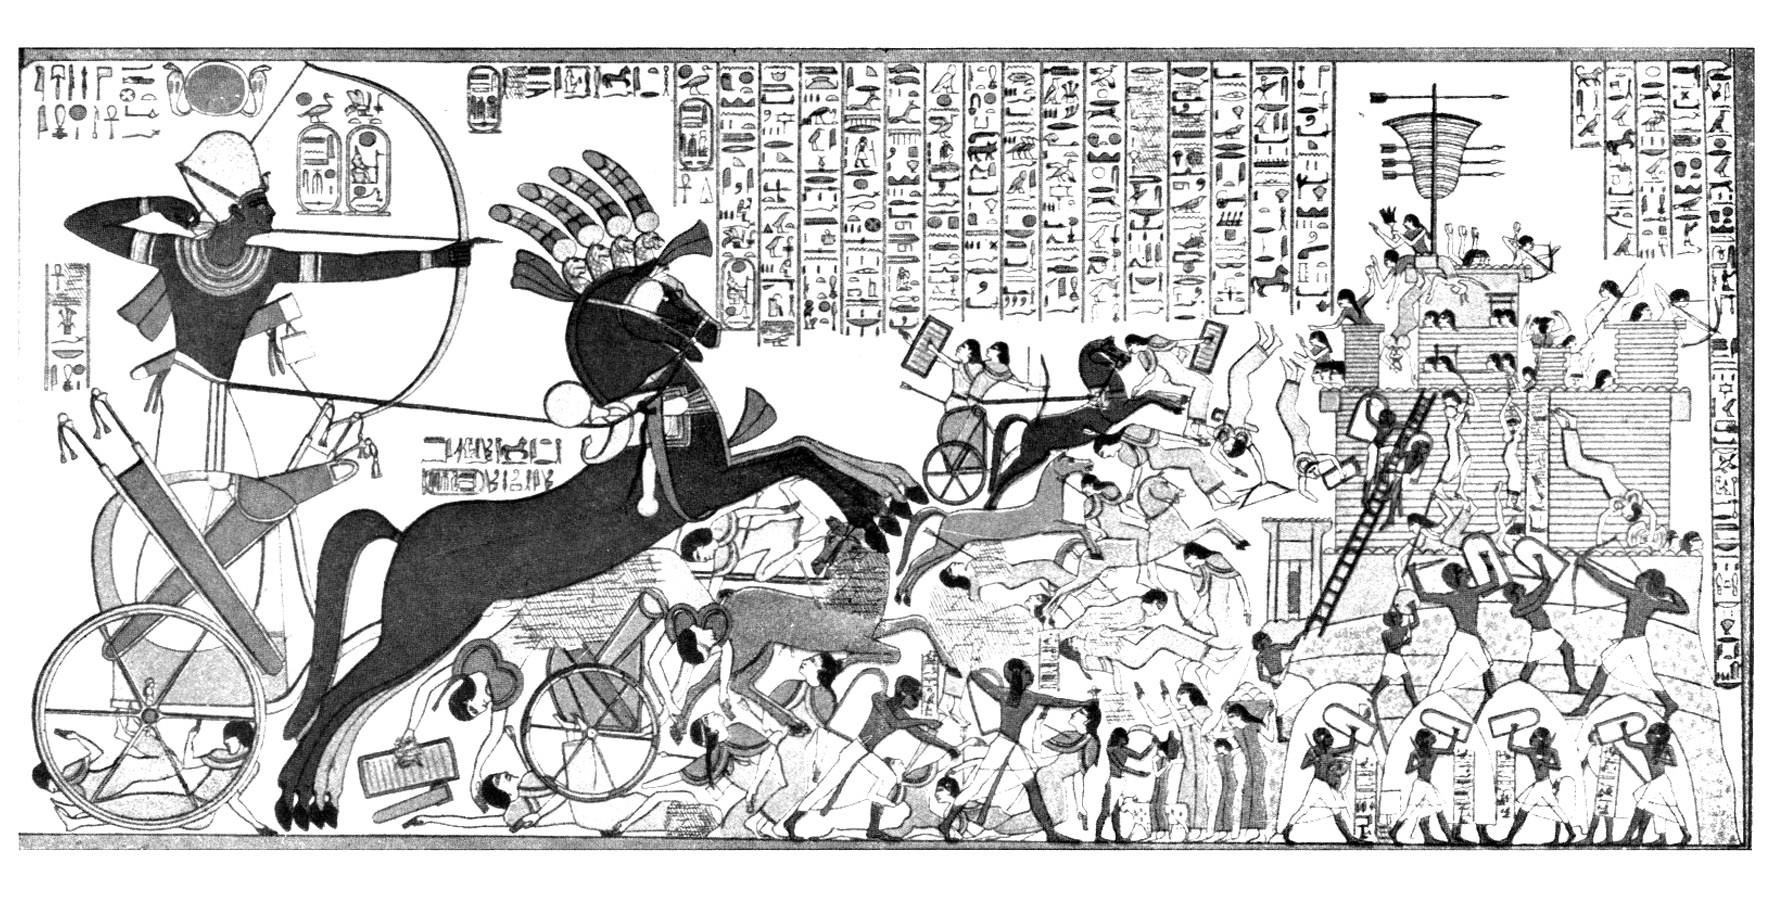 Egyptian mural painting representing an assault